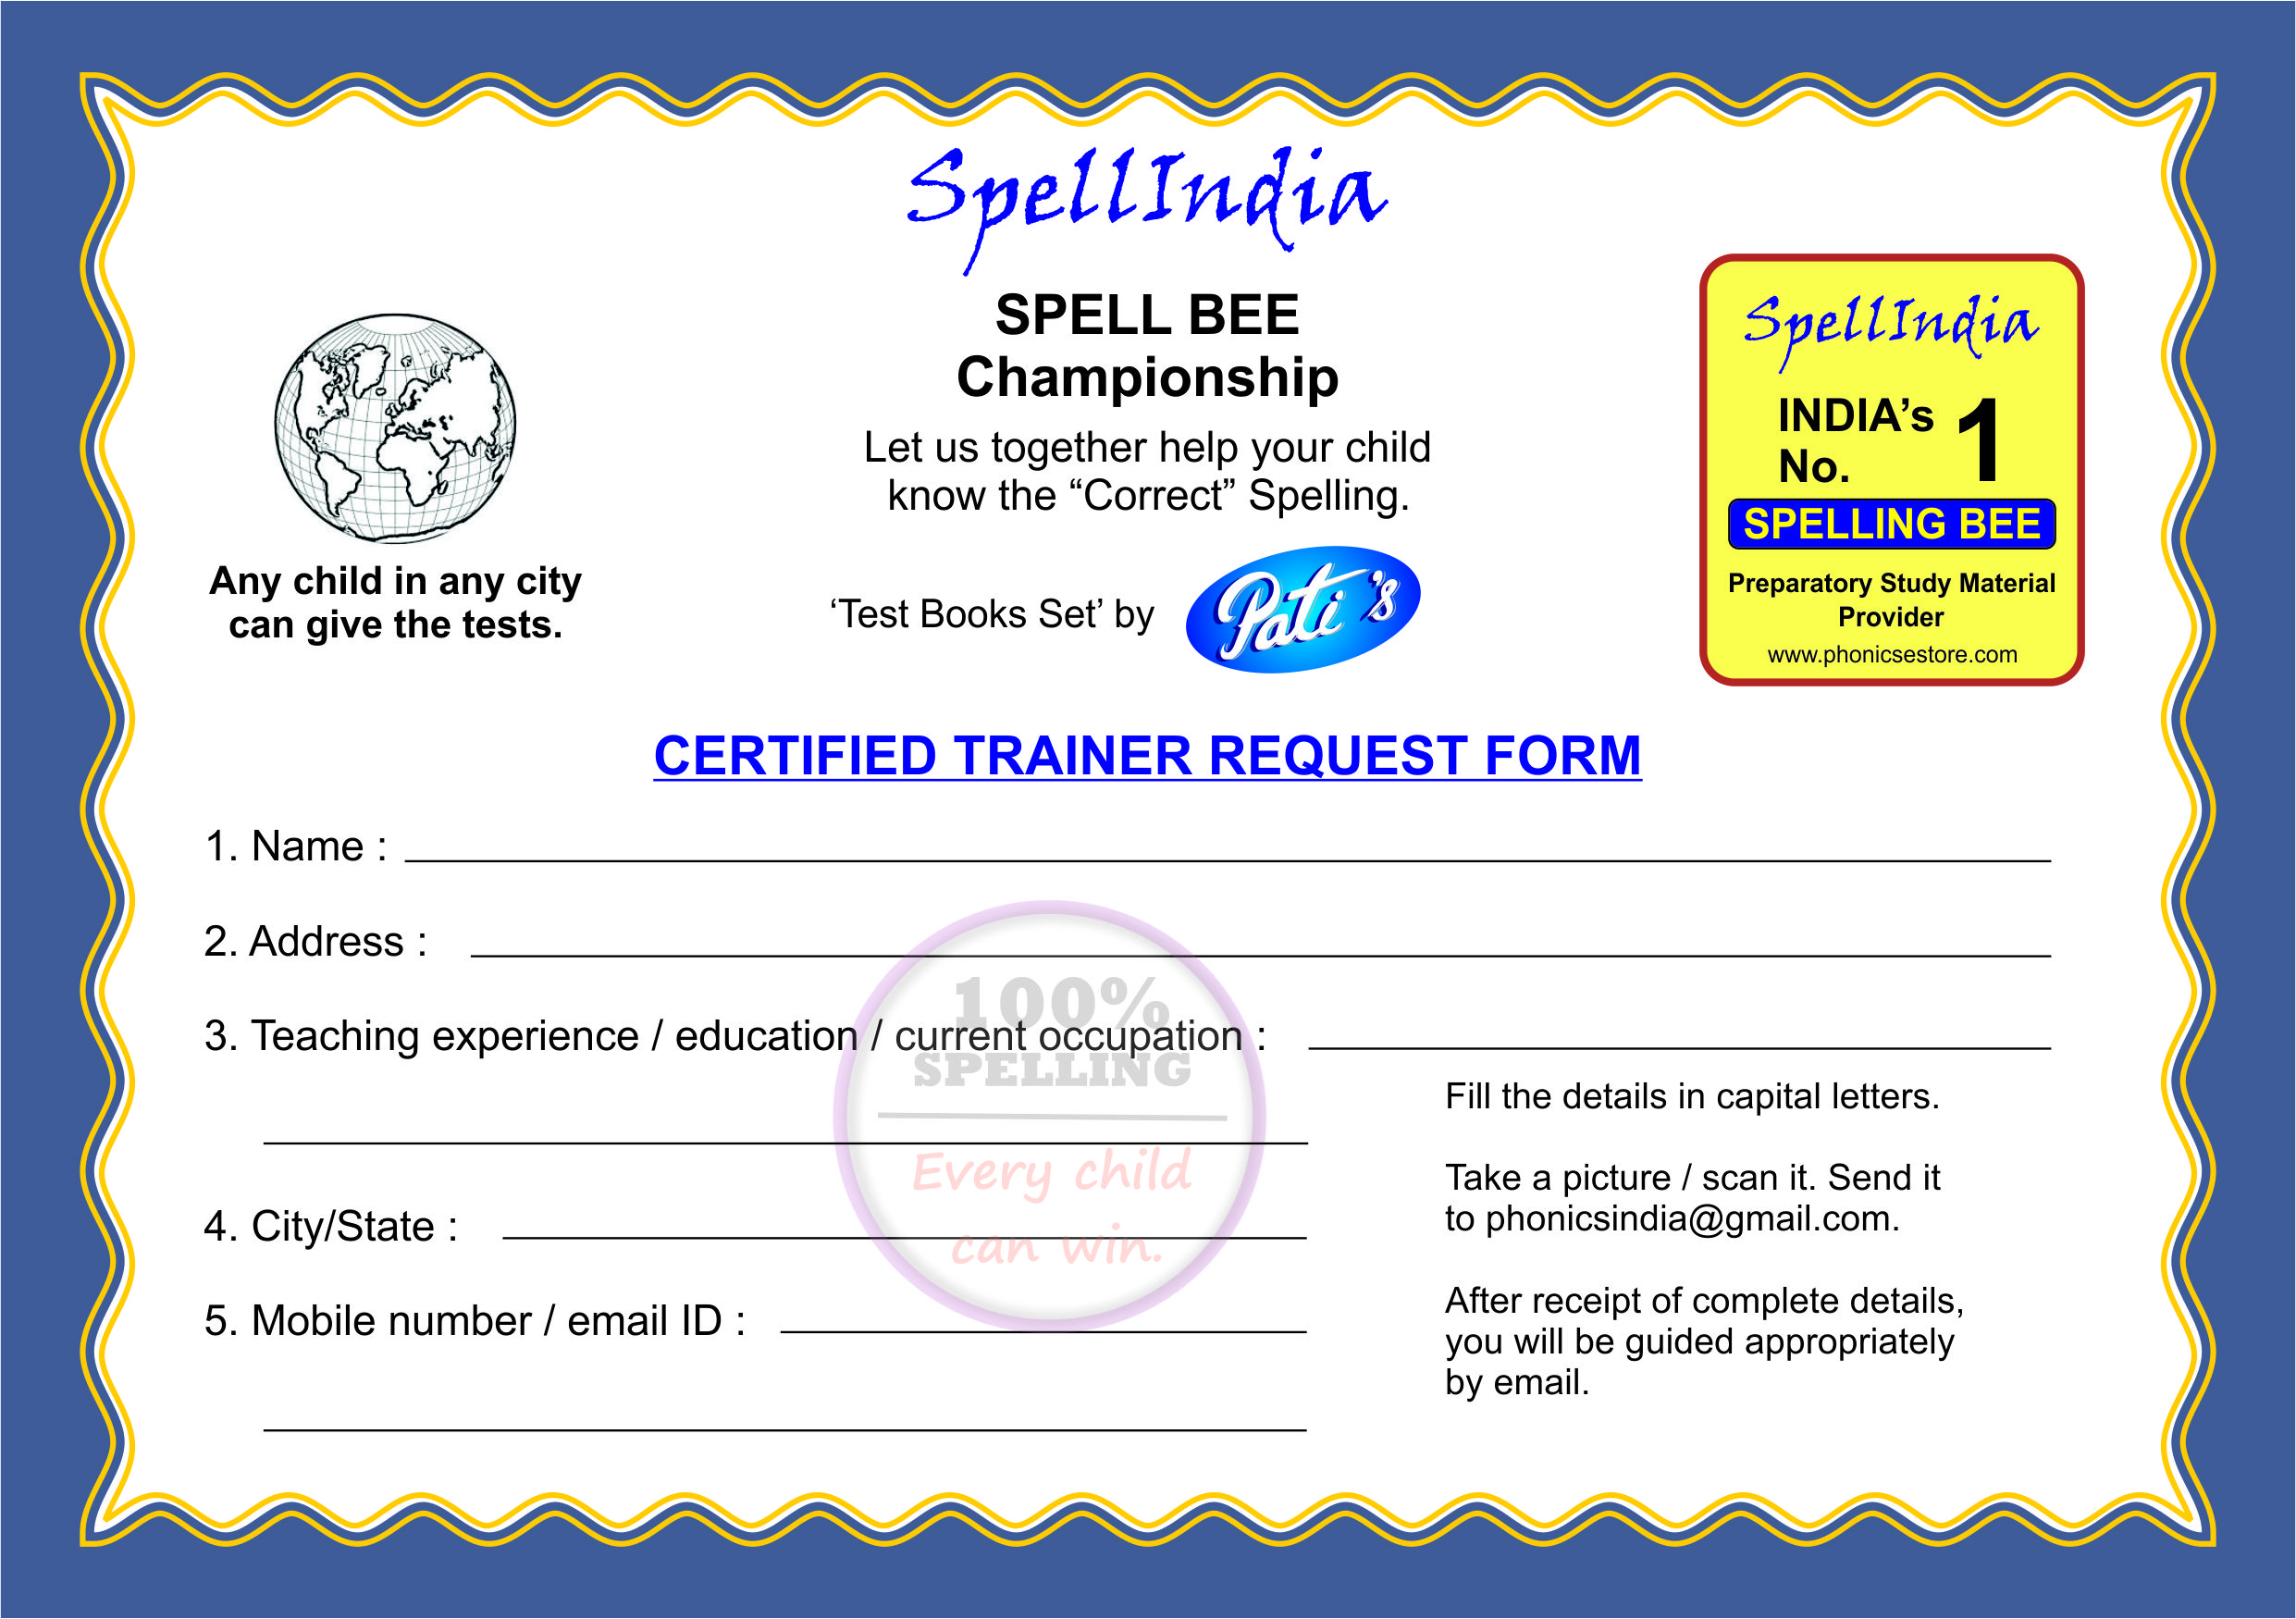 spell india spell bee trainer